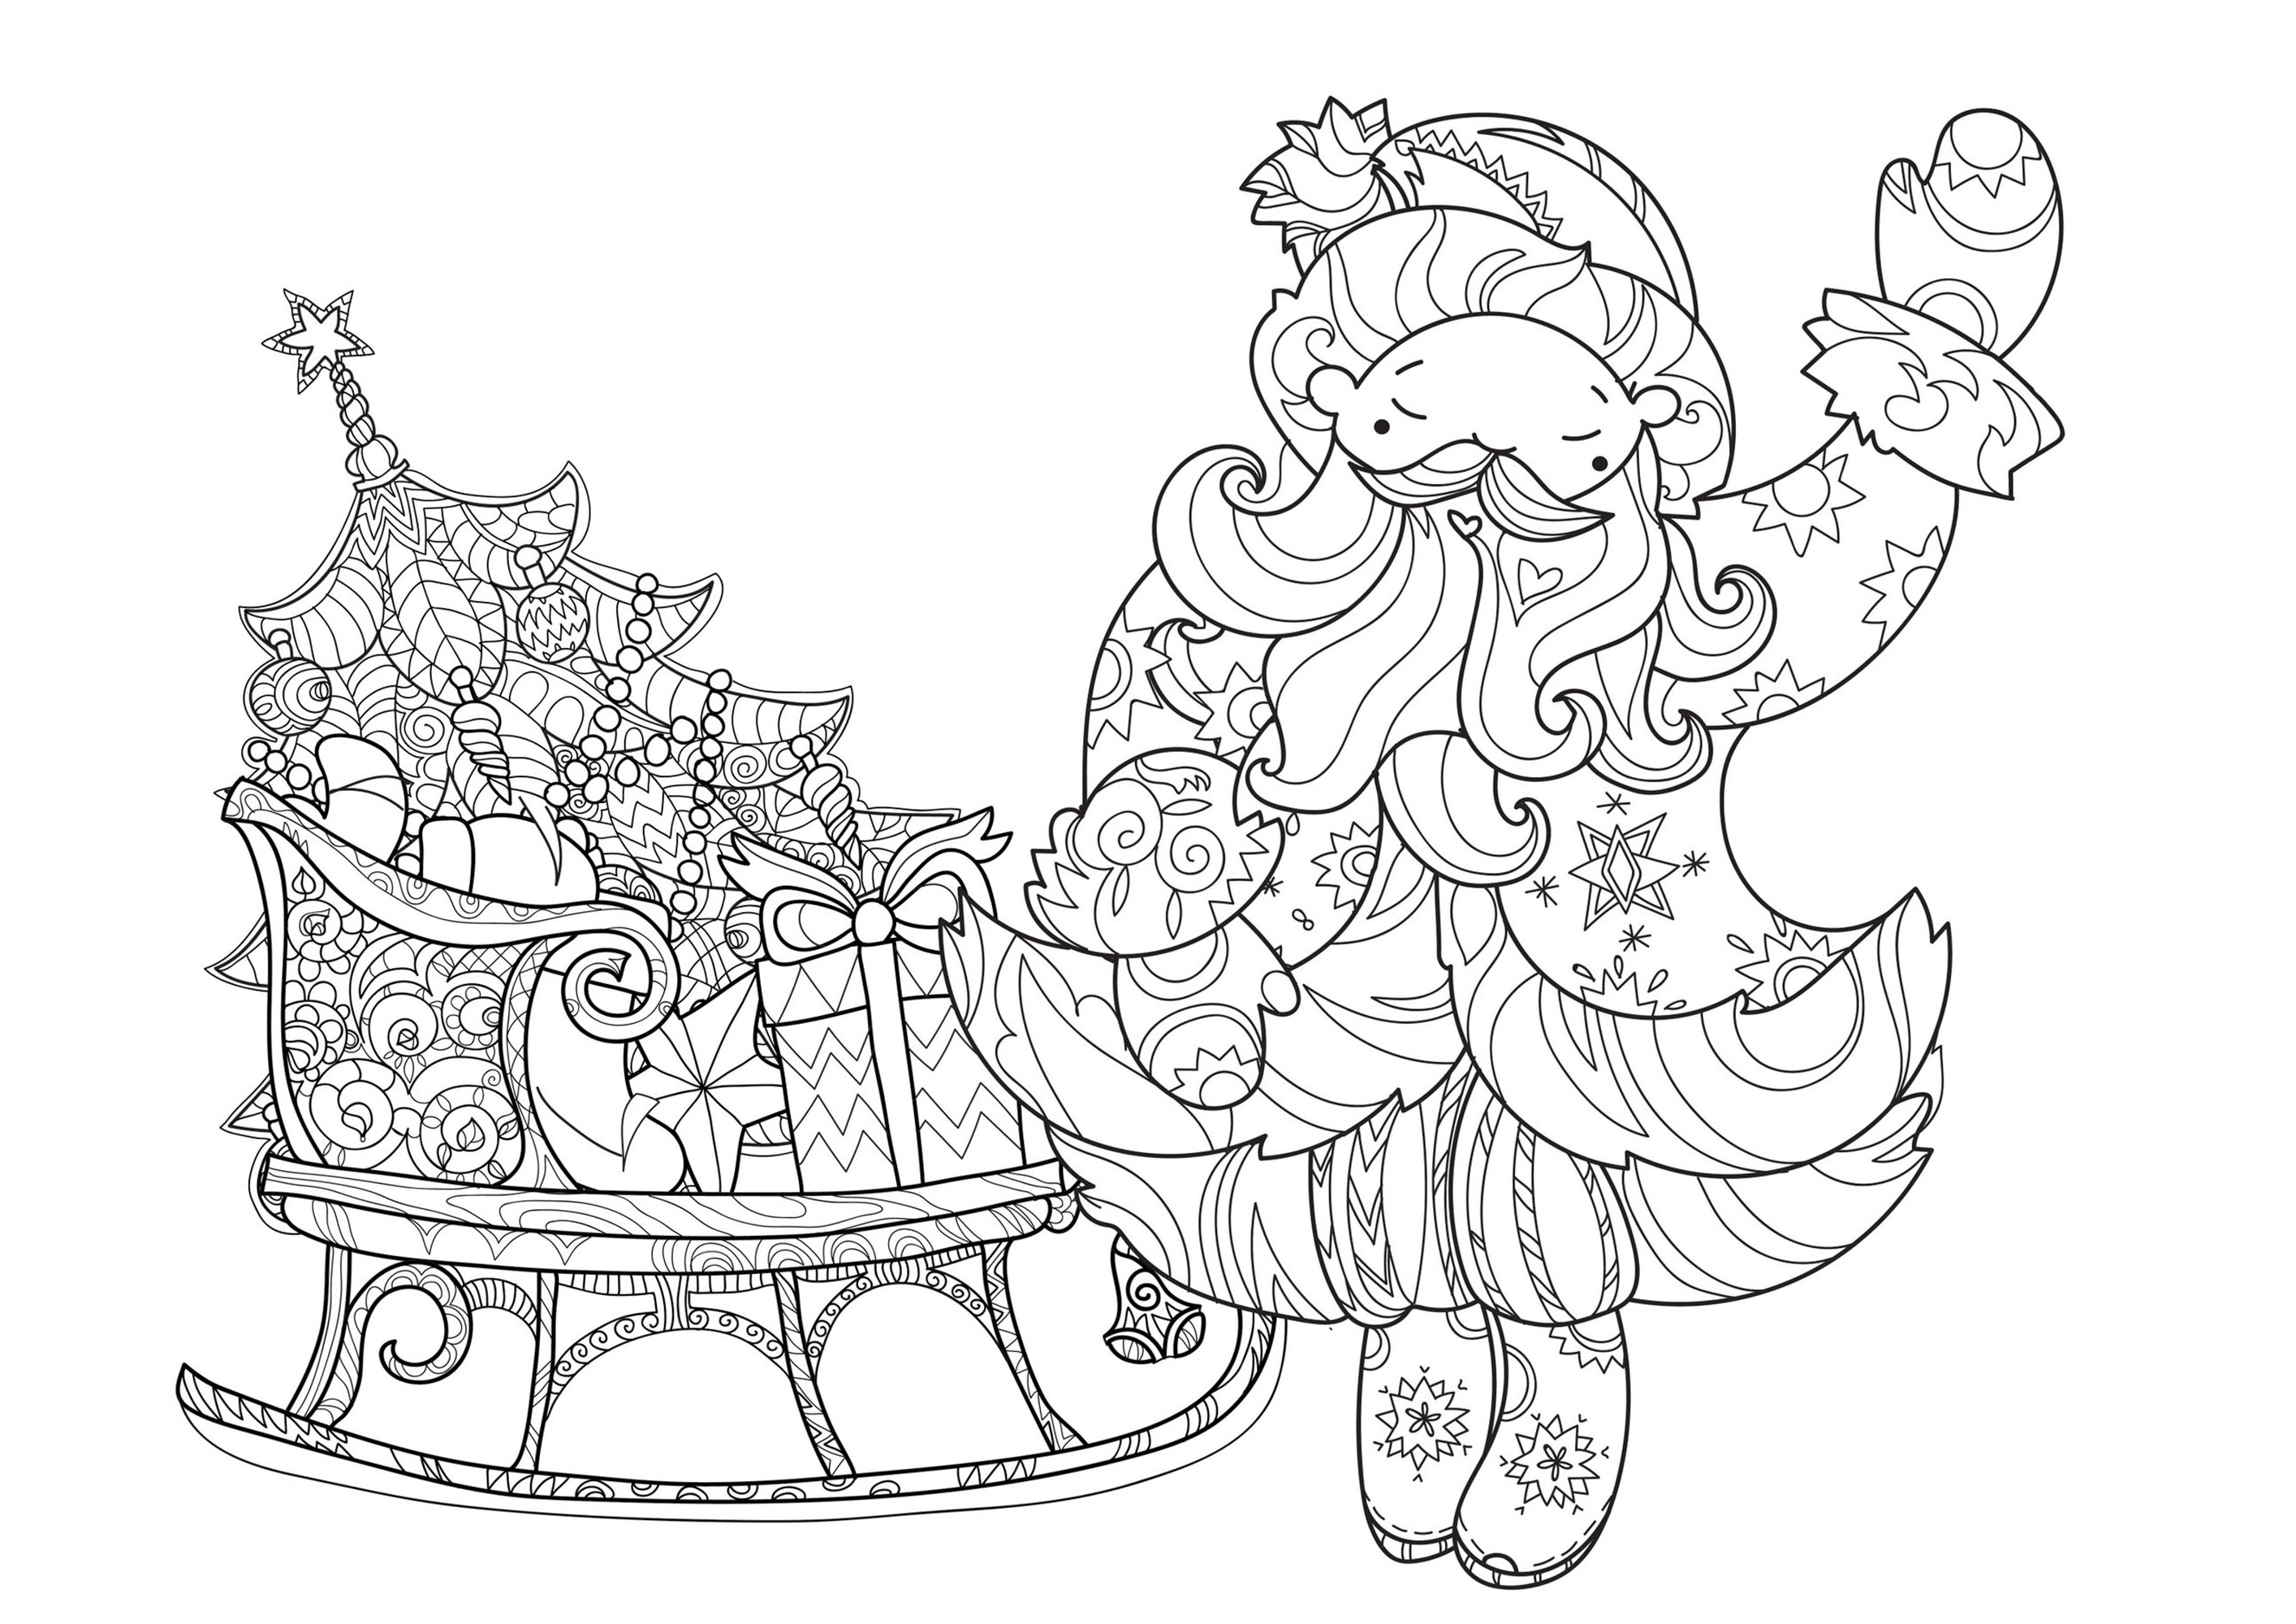 Santa and sleigh - Image with : Christmas tree, Gift, Santa claus